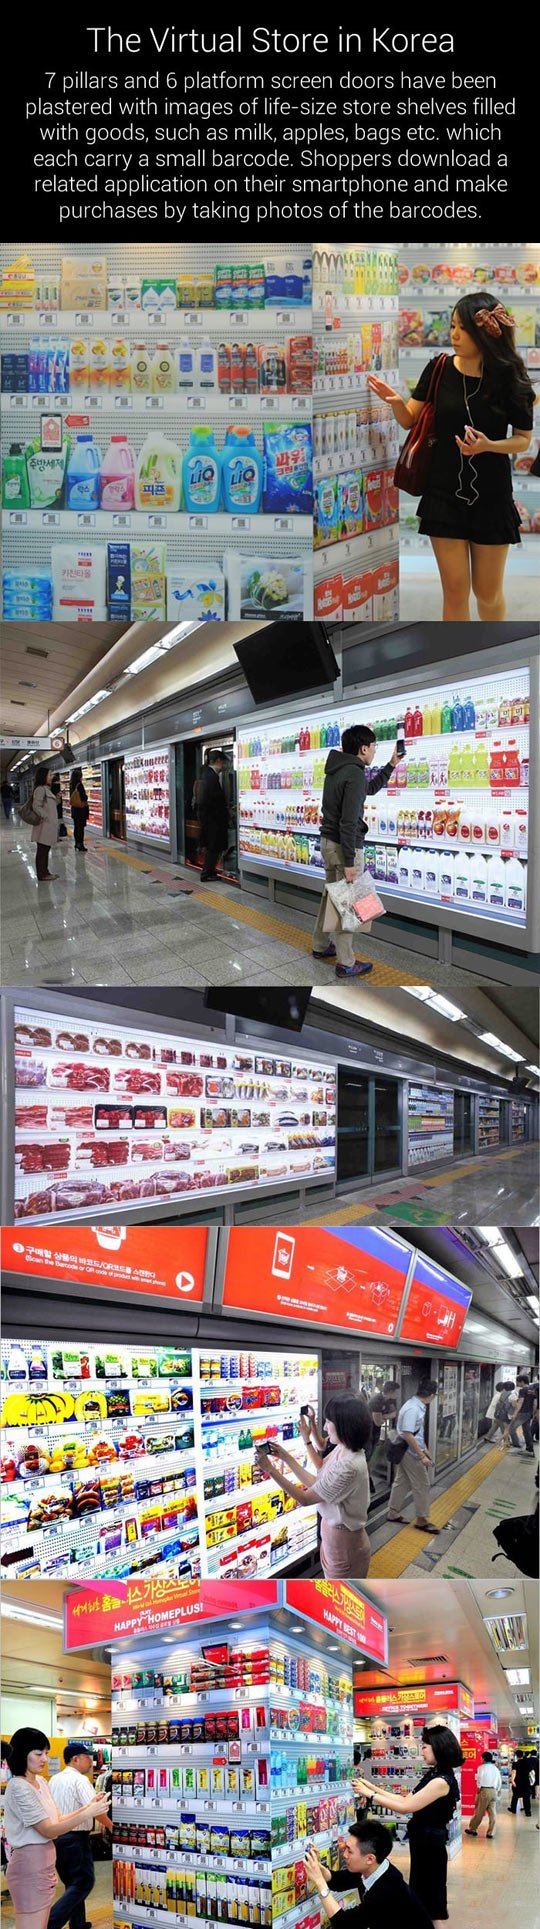 The virtual store in Korea.